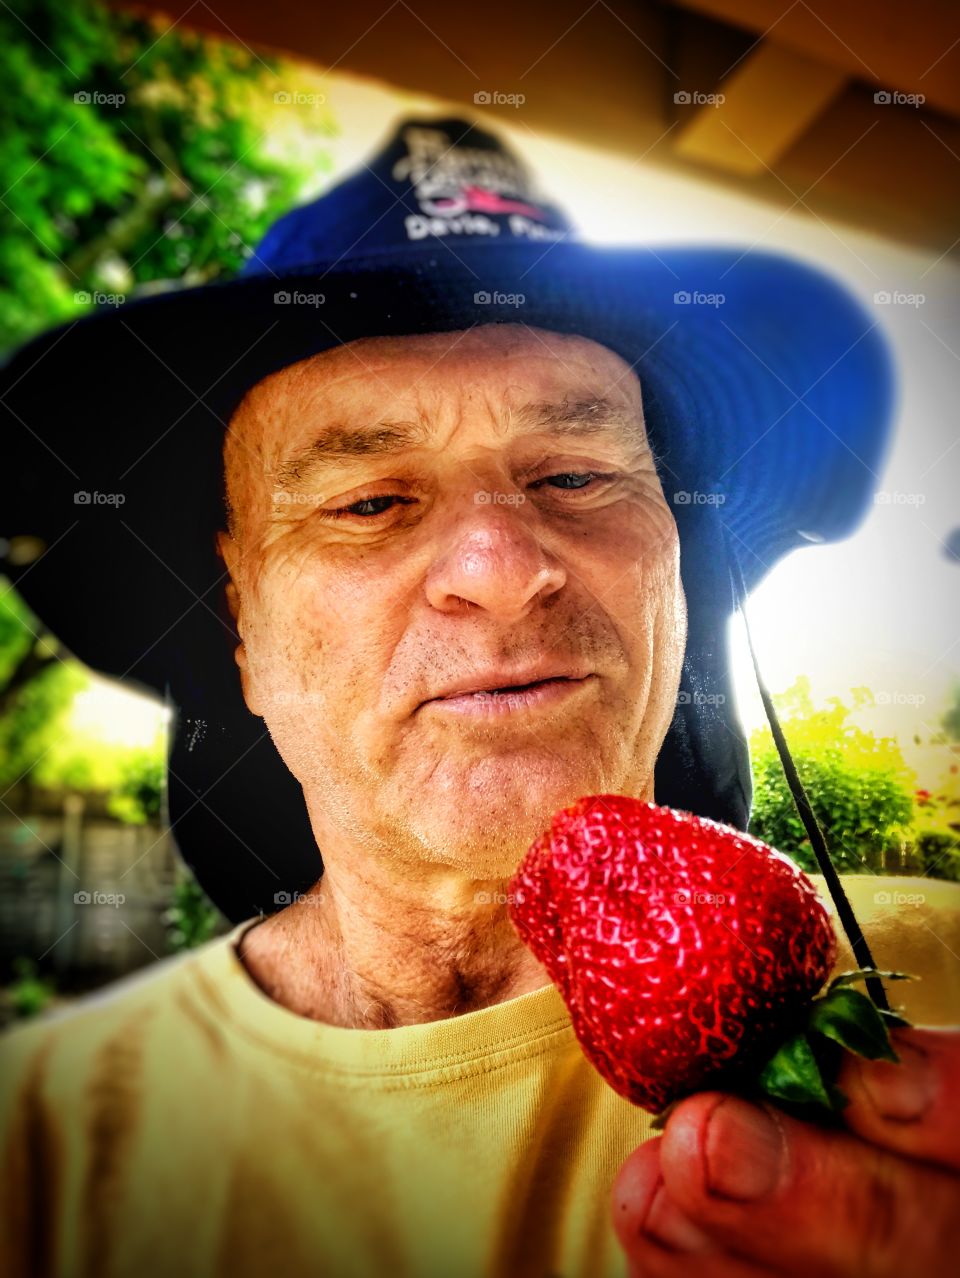 Gardener admiring a strawberry